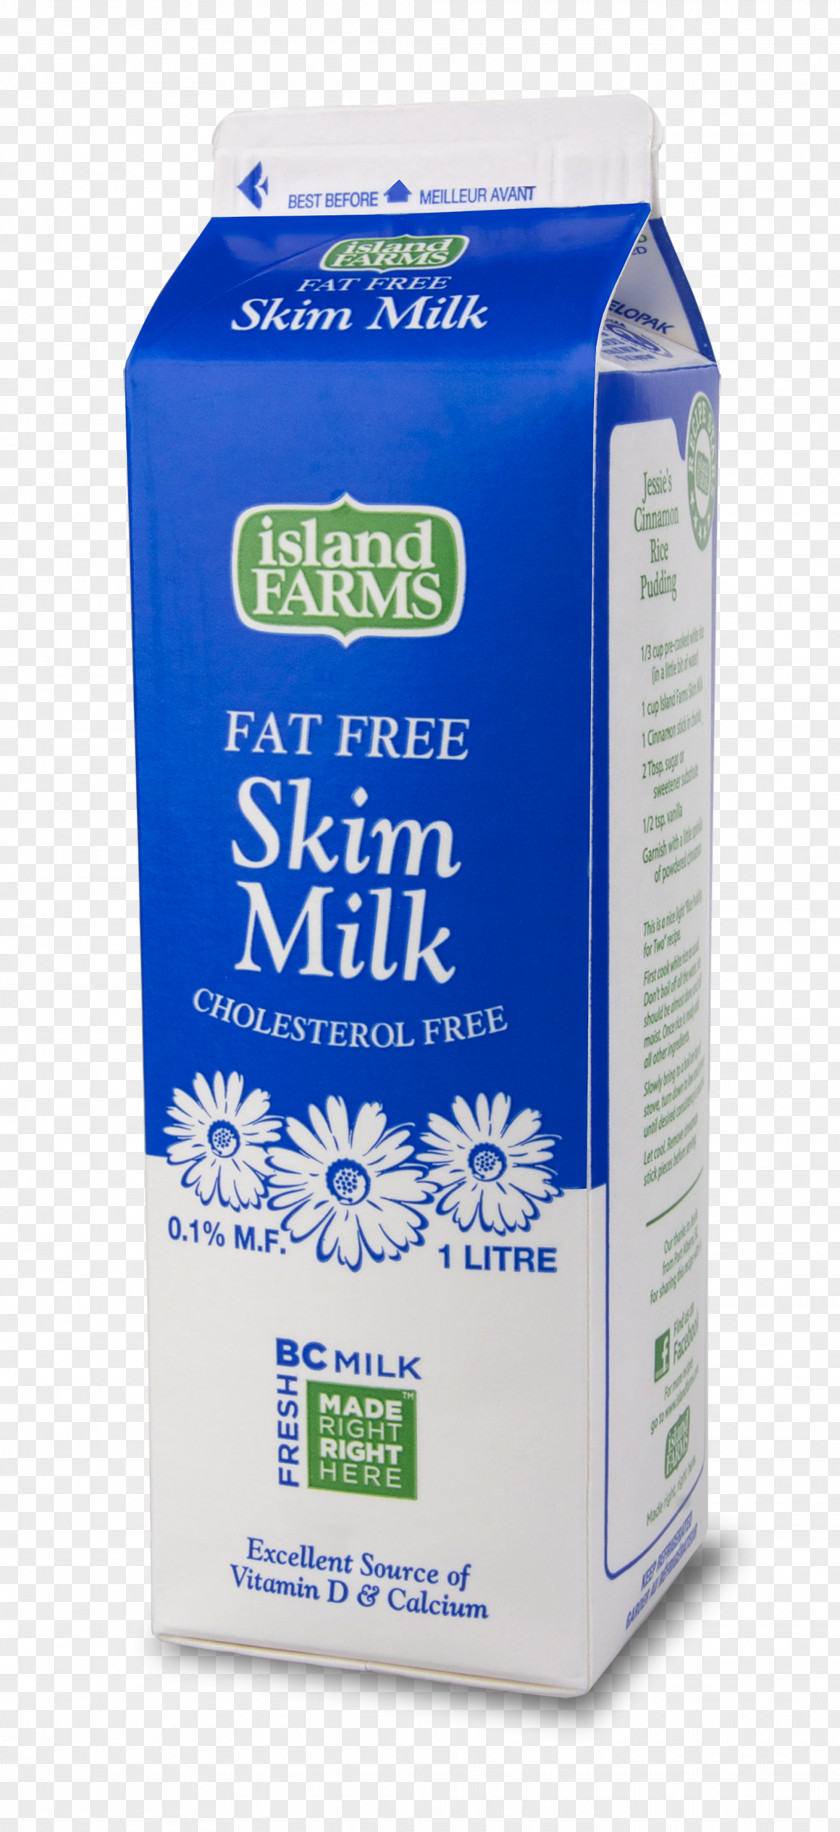 Dairy Milk Bottles Product Ingredient Agropur Cooperative (Island Farms) LiquidM PNG